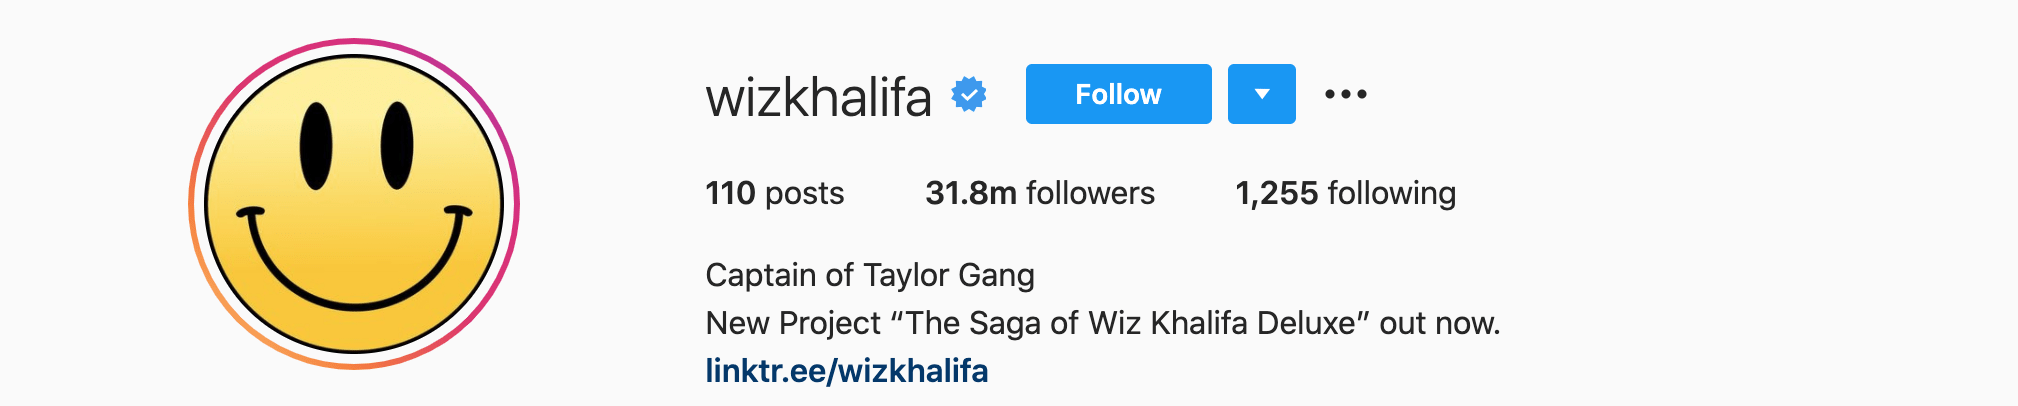 Top Instagram Influencers - WIZ KHALIFA